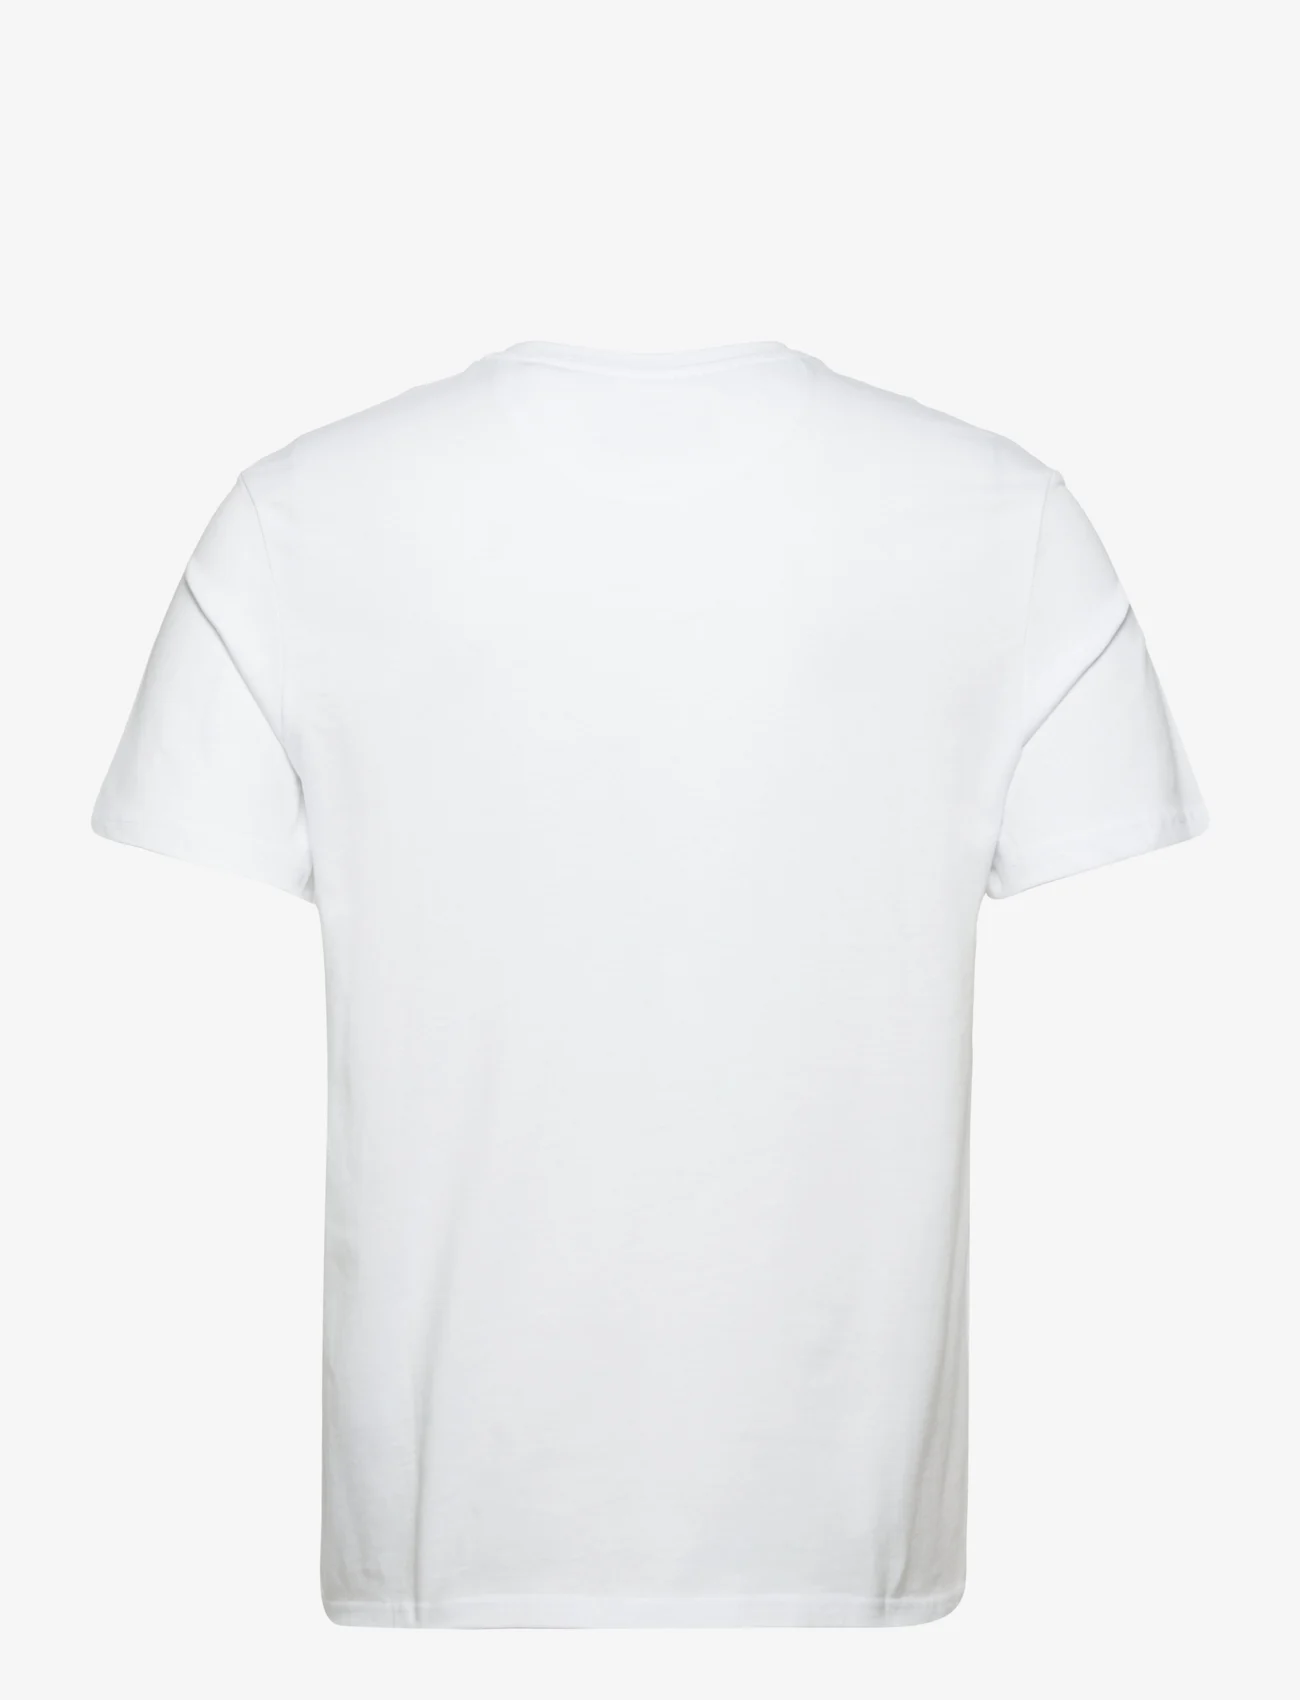 Lyle & Scott - Contrast Pocket T-Shirt - basic t-shirts - white/ navy - 1